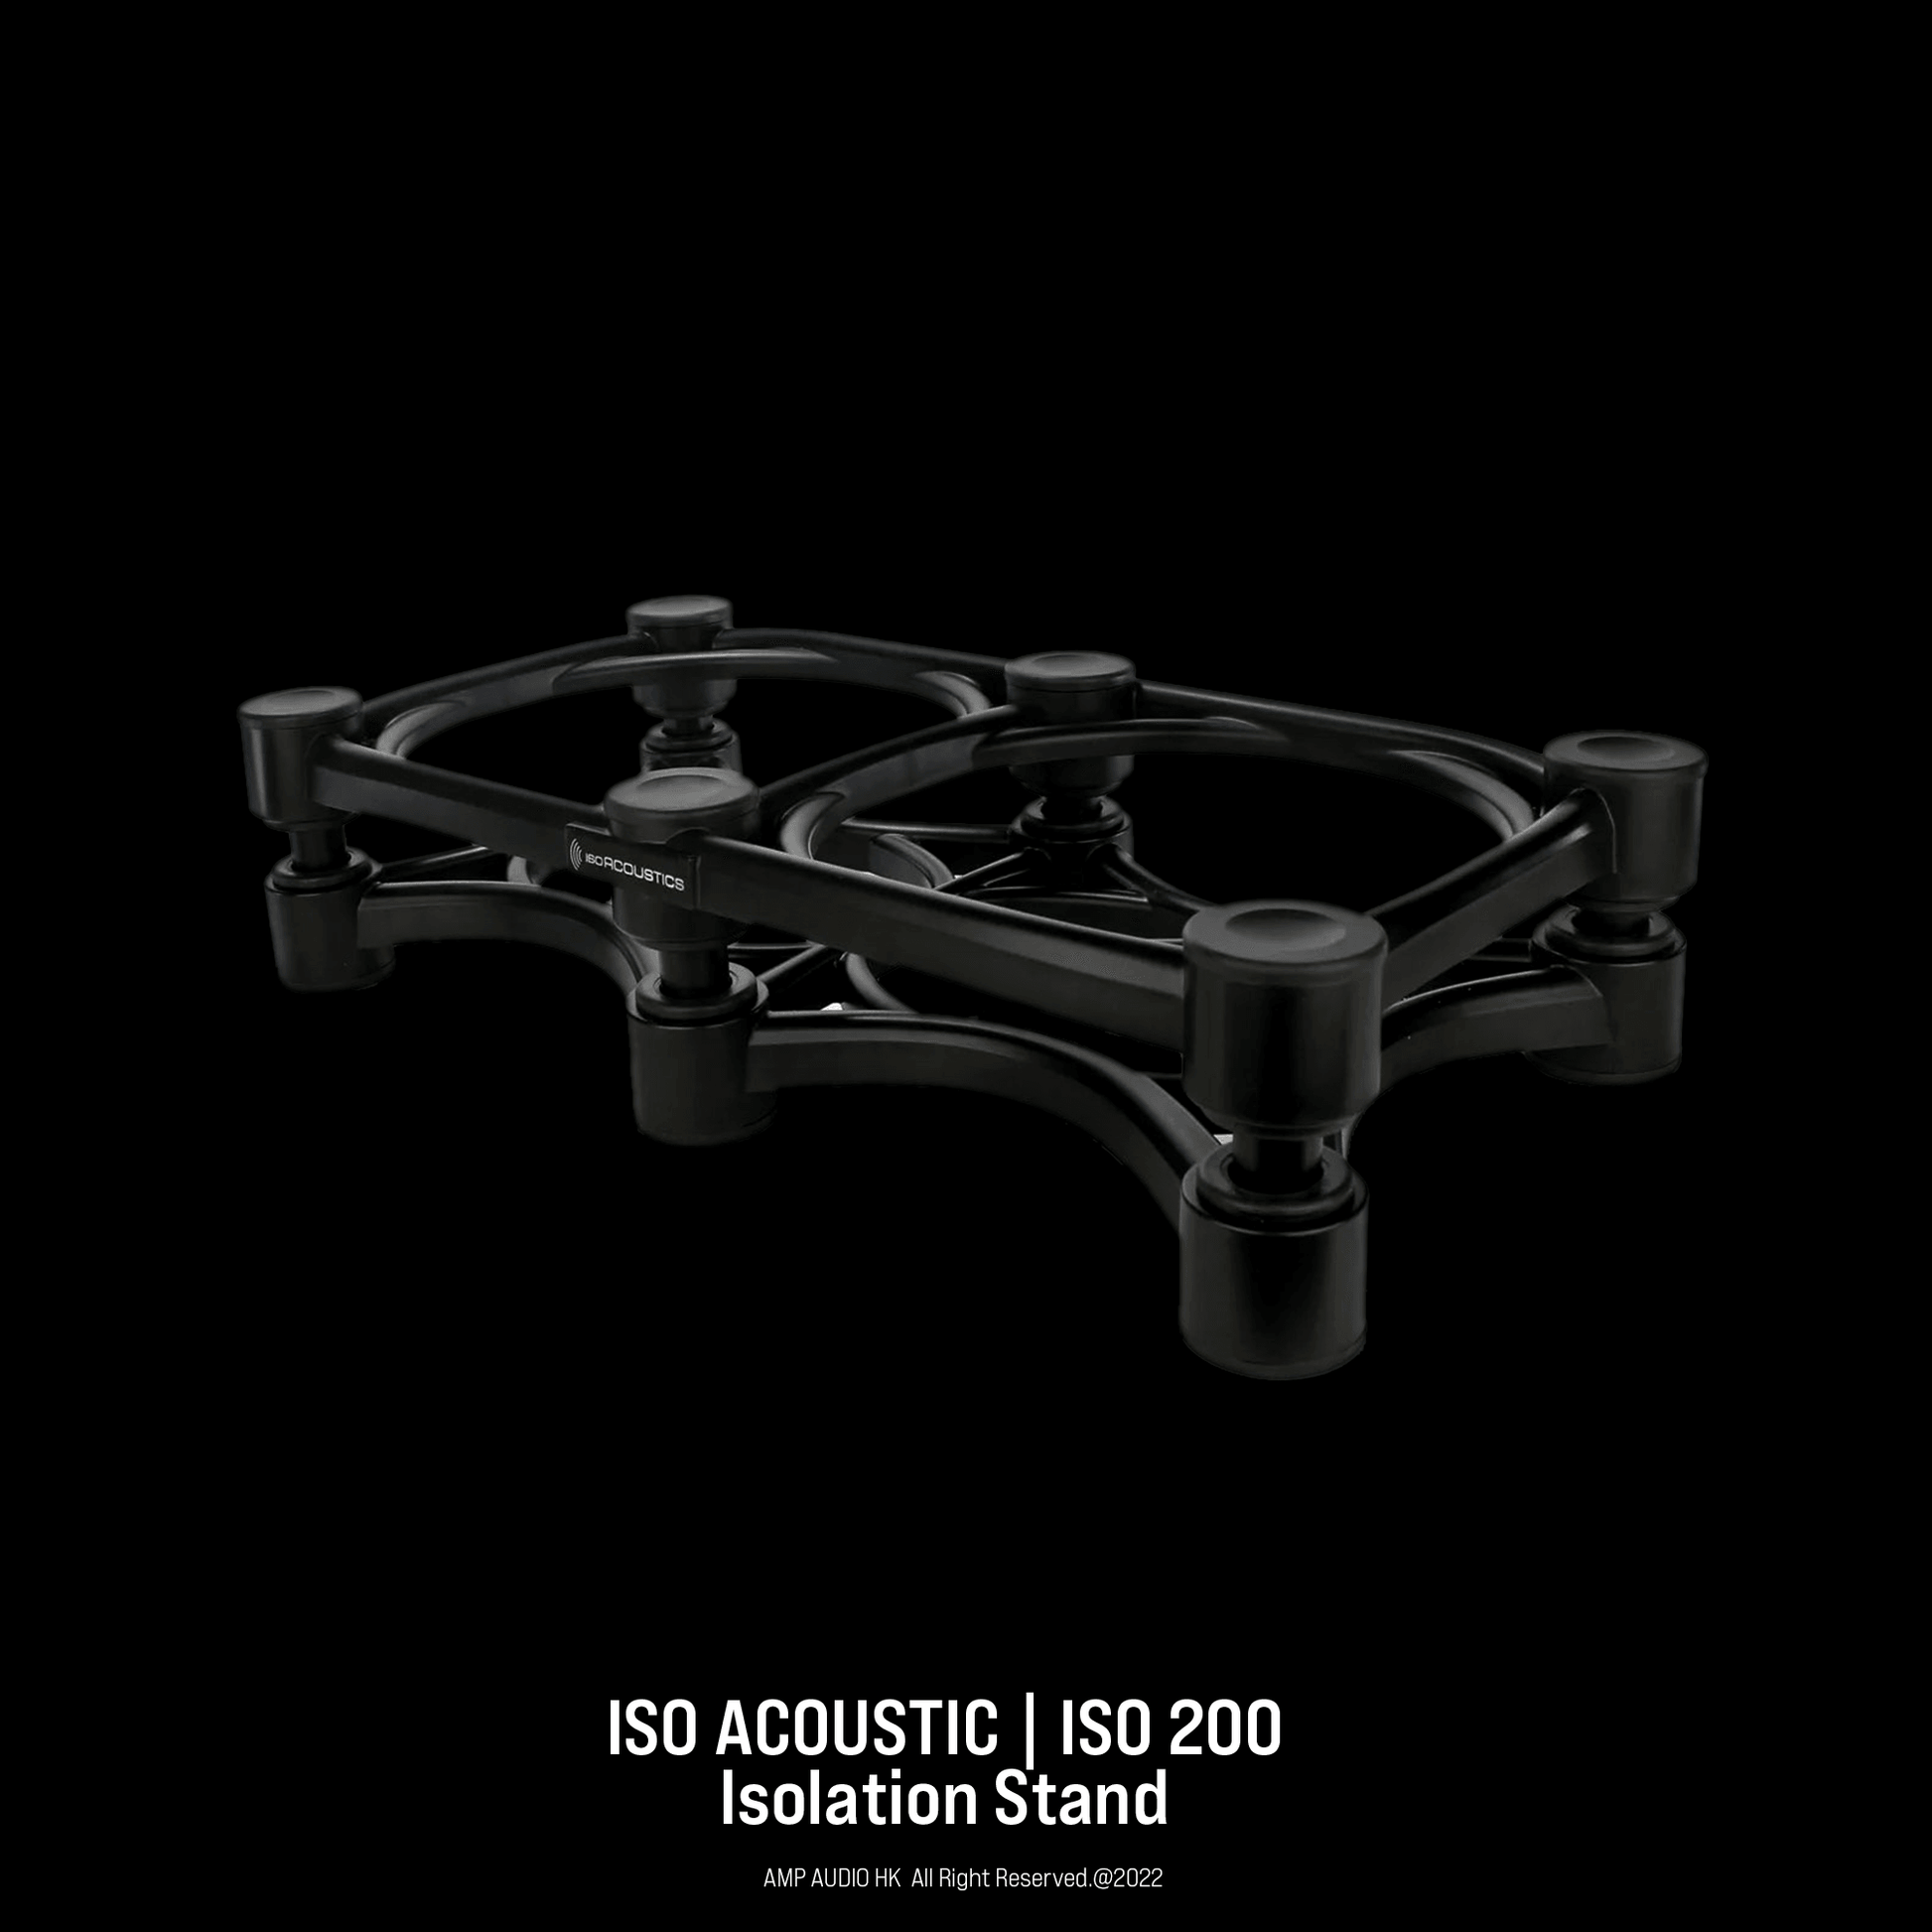 Iso Acoustic | ISO 200 - AMP AUDIO